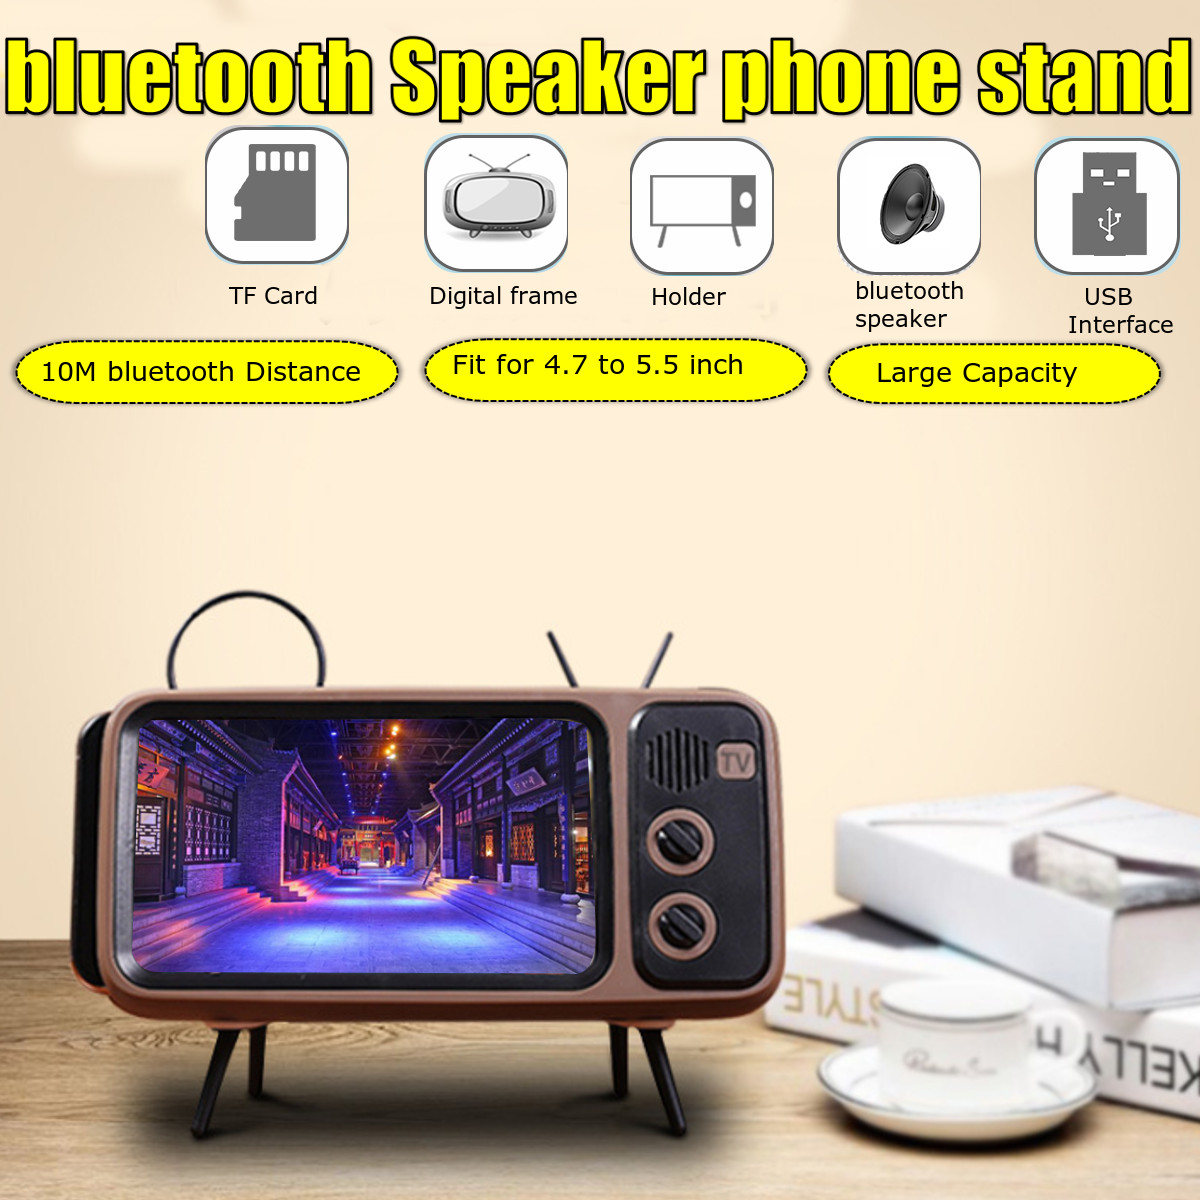 Bakeey-Mini-Retro-TV-Pattern-bluetooth-Speaker-Desktop-Cell-Phone-Stand-Holder-Lazy-Bracket-for-Mobi-1634628-1